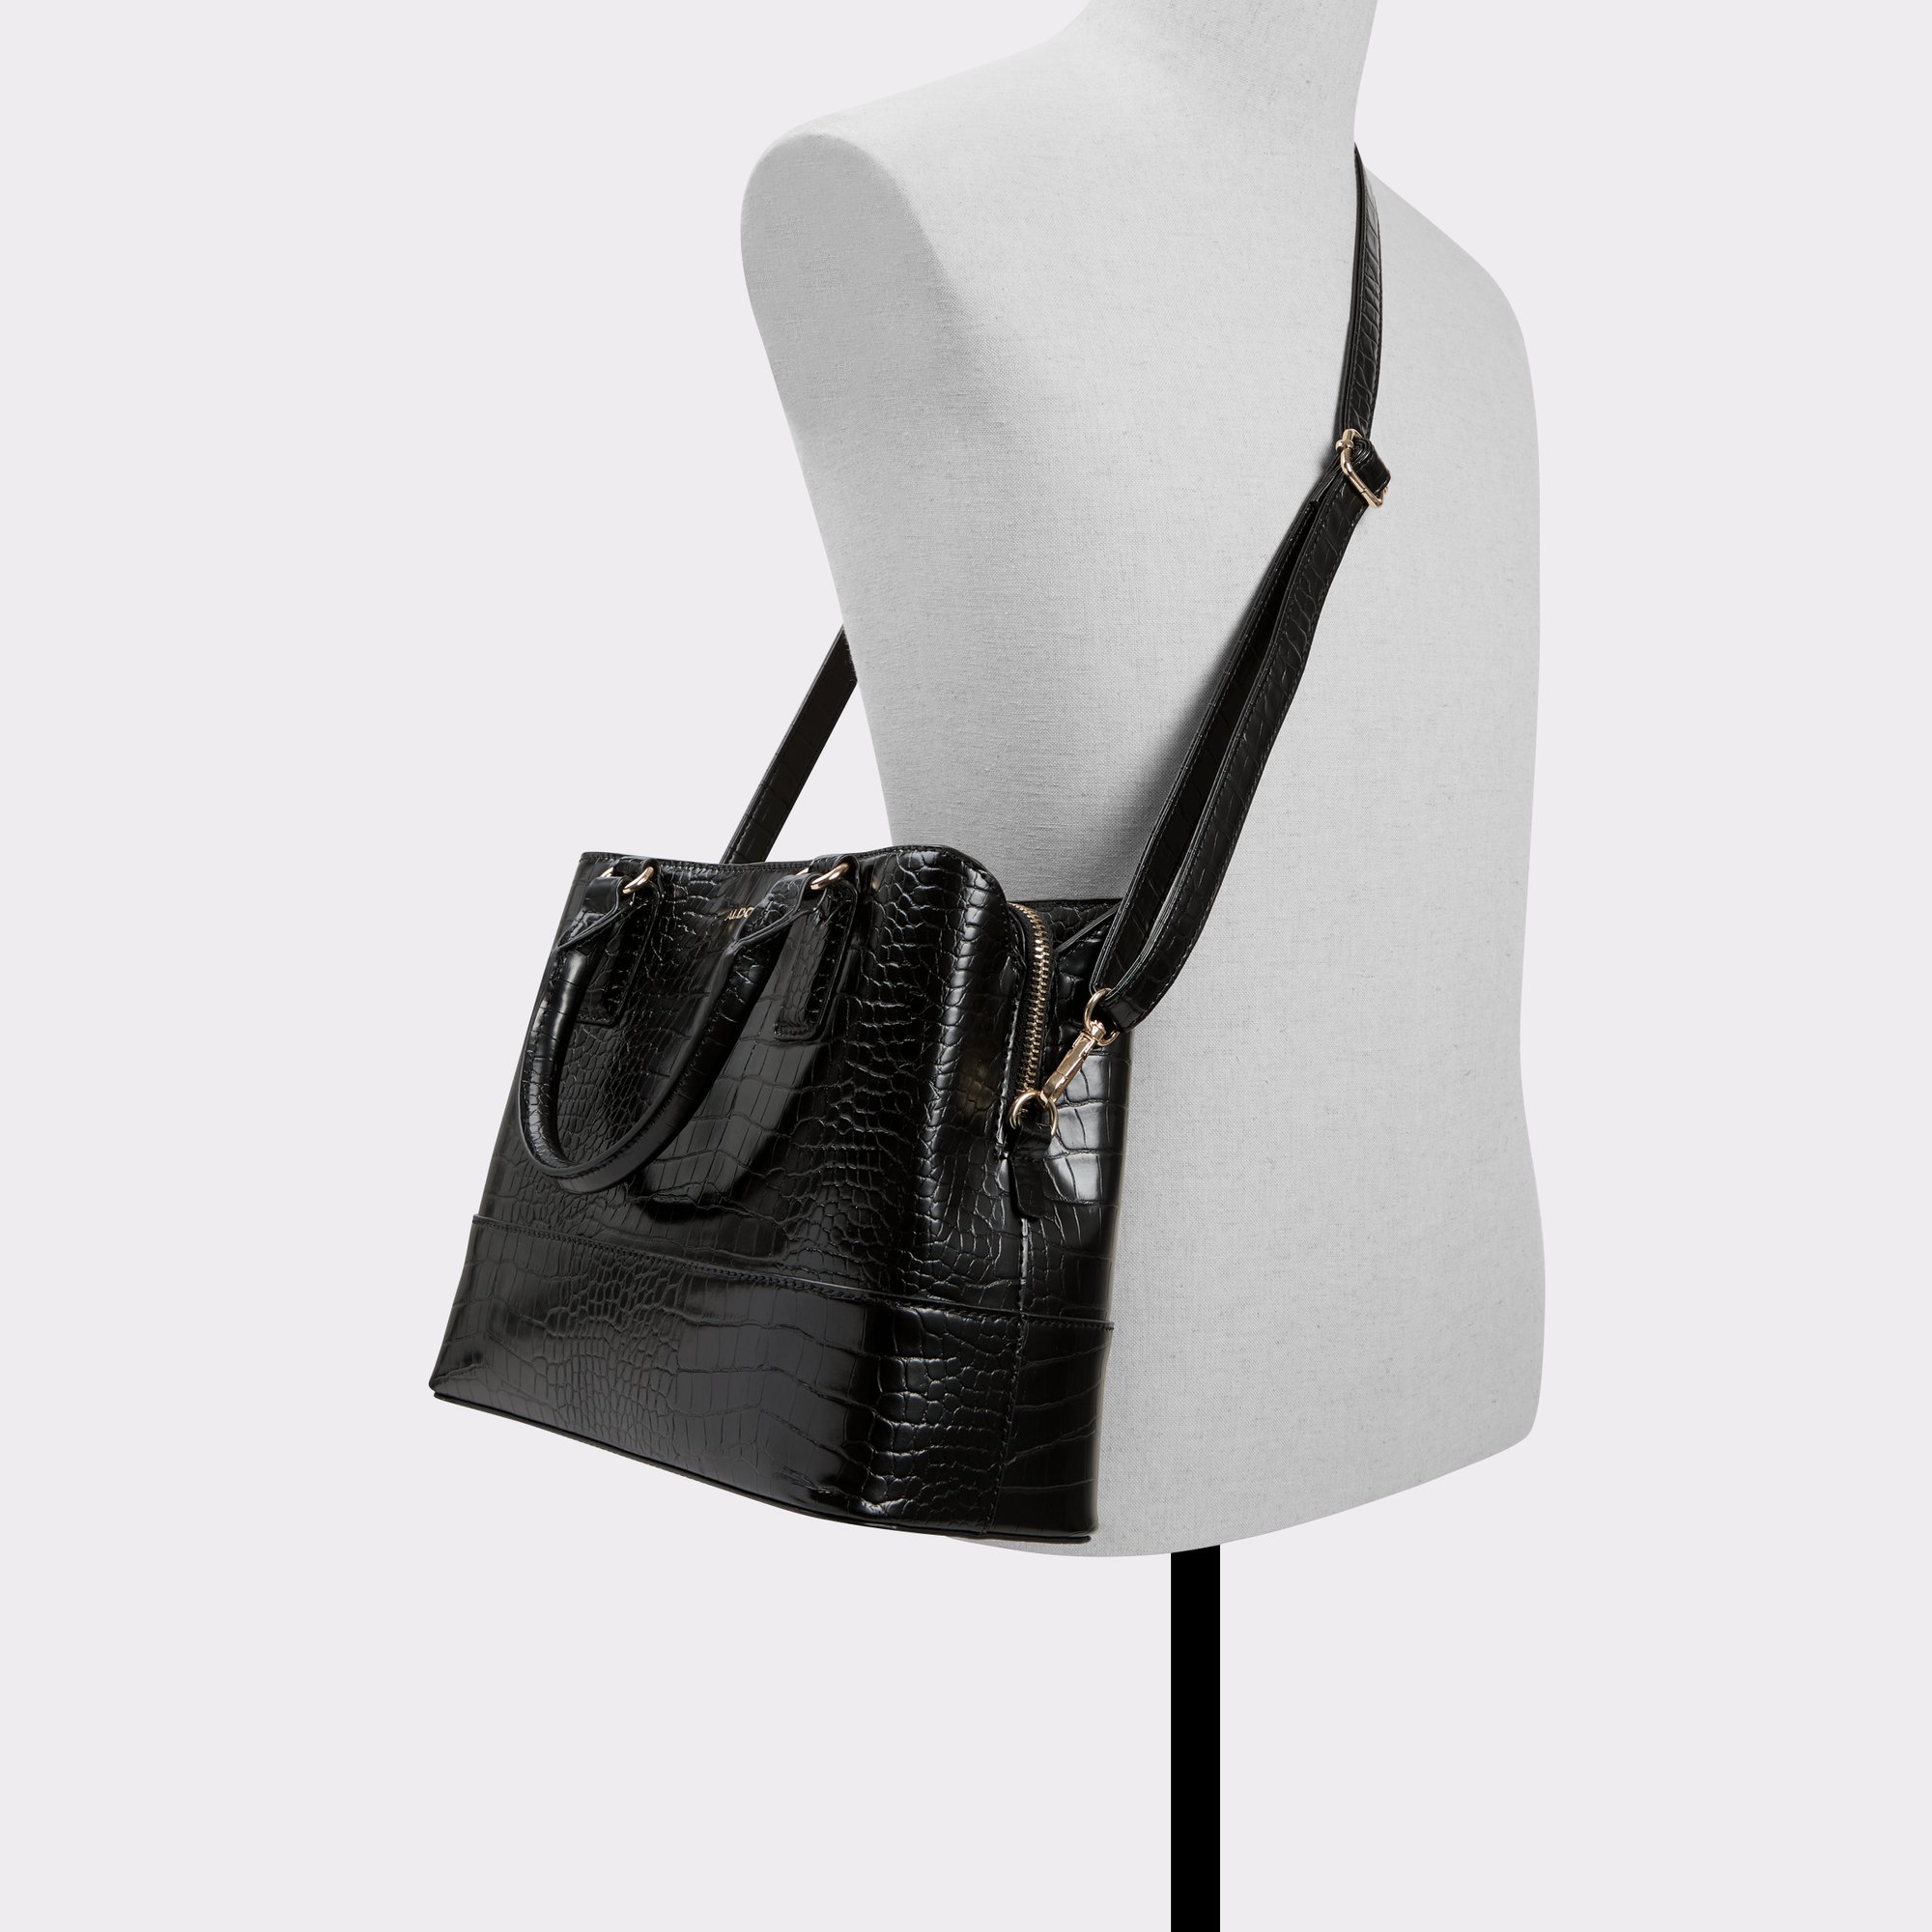 Buy ALDO Black Womens Black Synthetic Satchel Bag